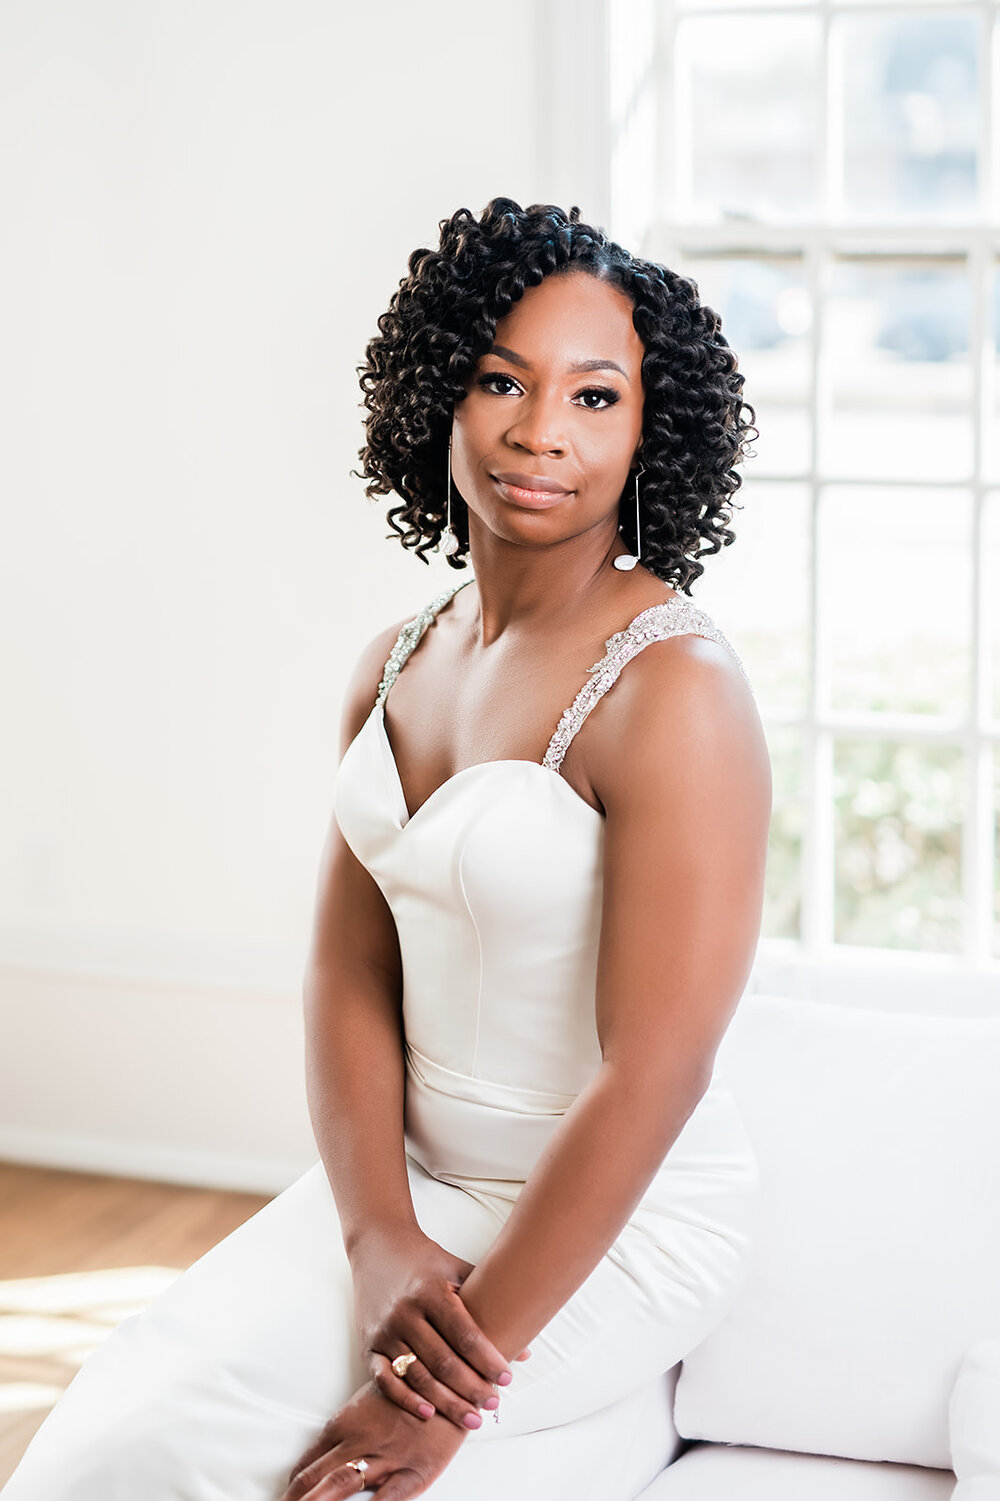 Houston Bridal Portraits- Pharris Photography- Bridal Session- Creative Chateau- Megan Clark